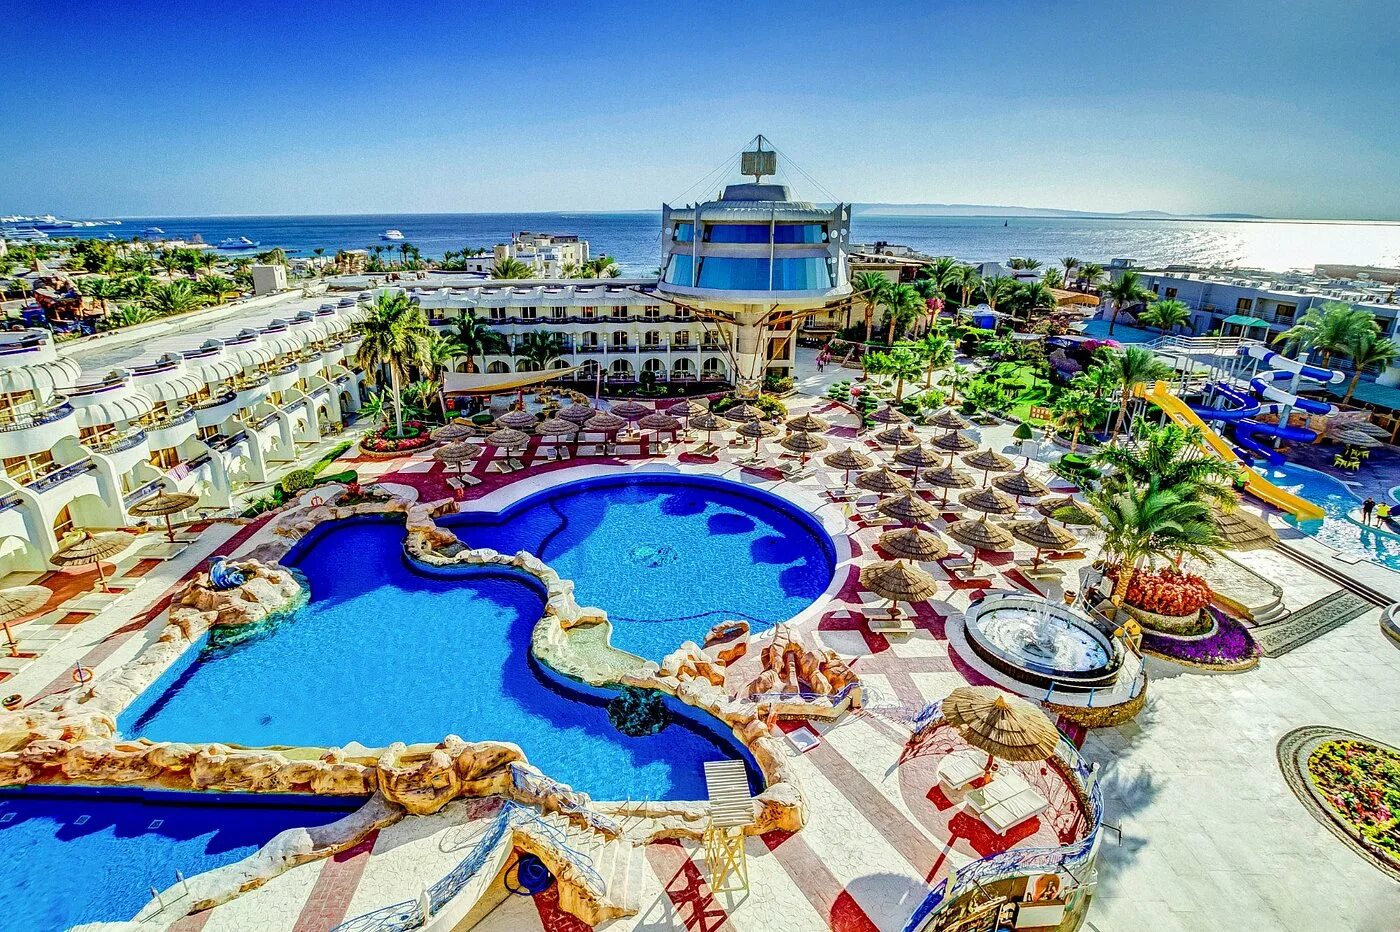 Seagull beach hurghada 4. Sea Gull Resort Египет. Отель Сигал Бич Резорт Хургада. Отель Seagull Beach Resort 4*. Seagull Beach Resort Hurghada 4 ****, Египет, Хургада.